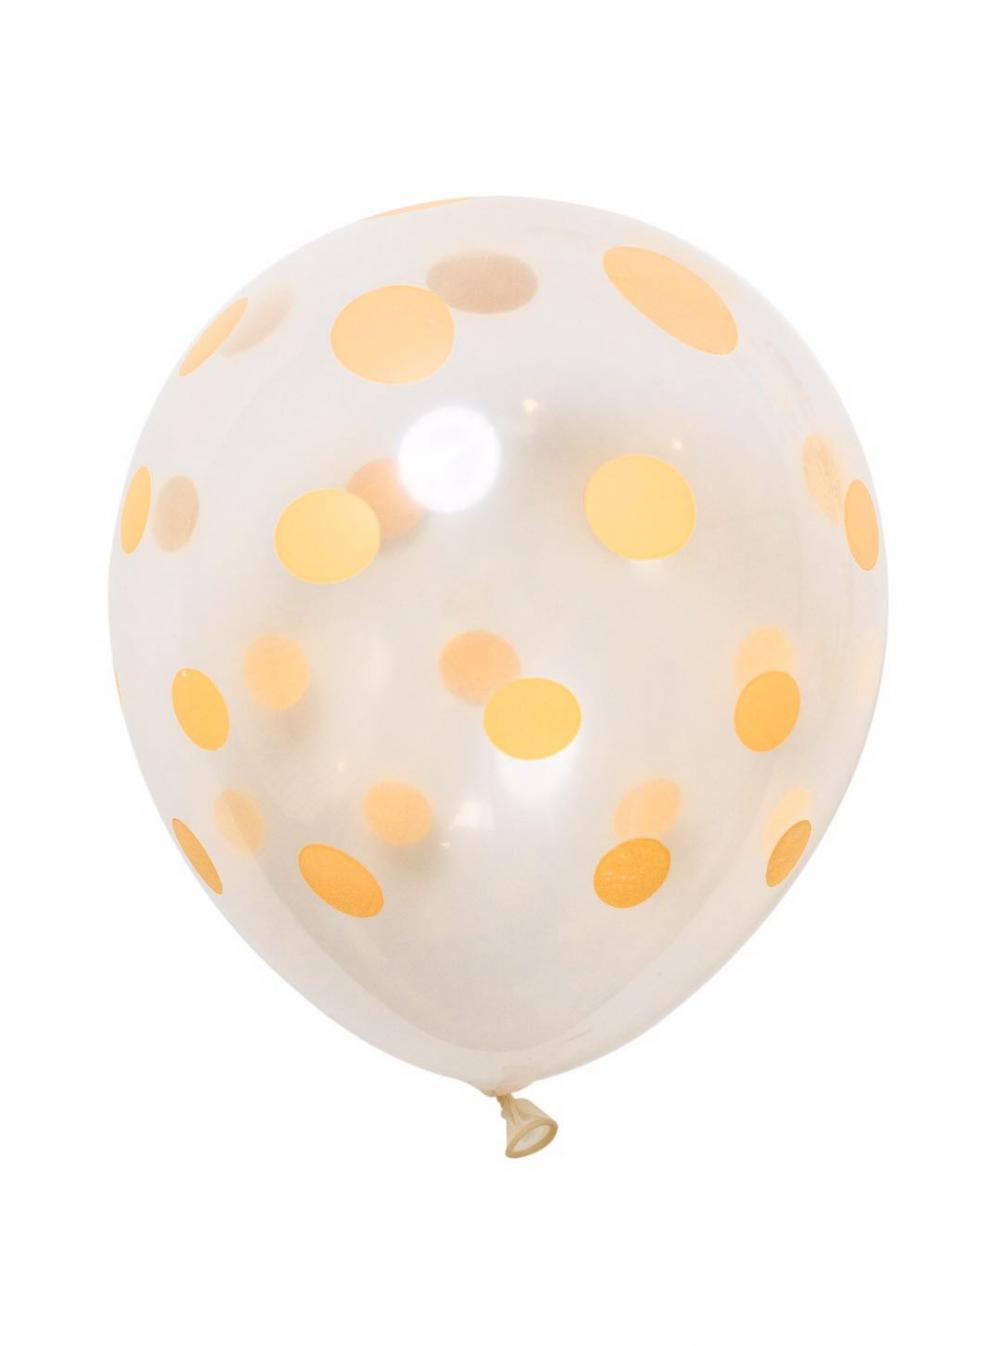 12 Inch Standard Polka Dot Balloons Clear Balloon Yellow Dot (10PCS)